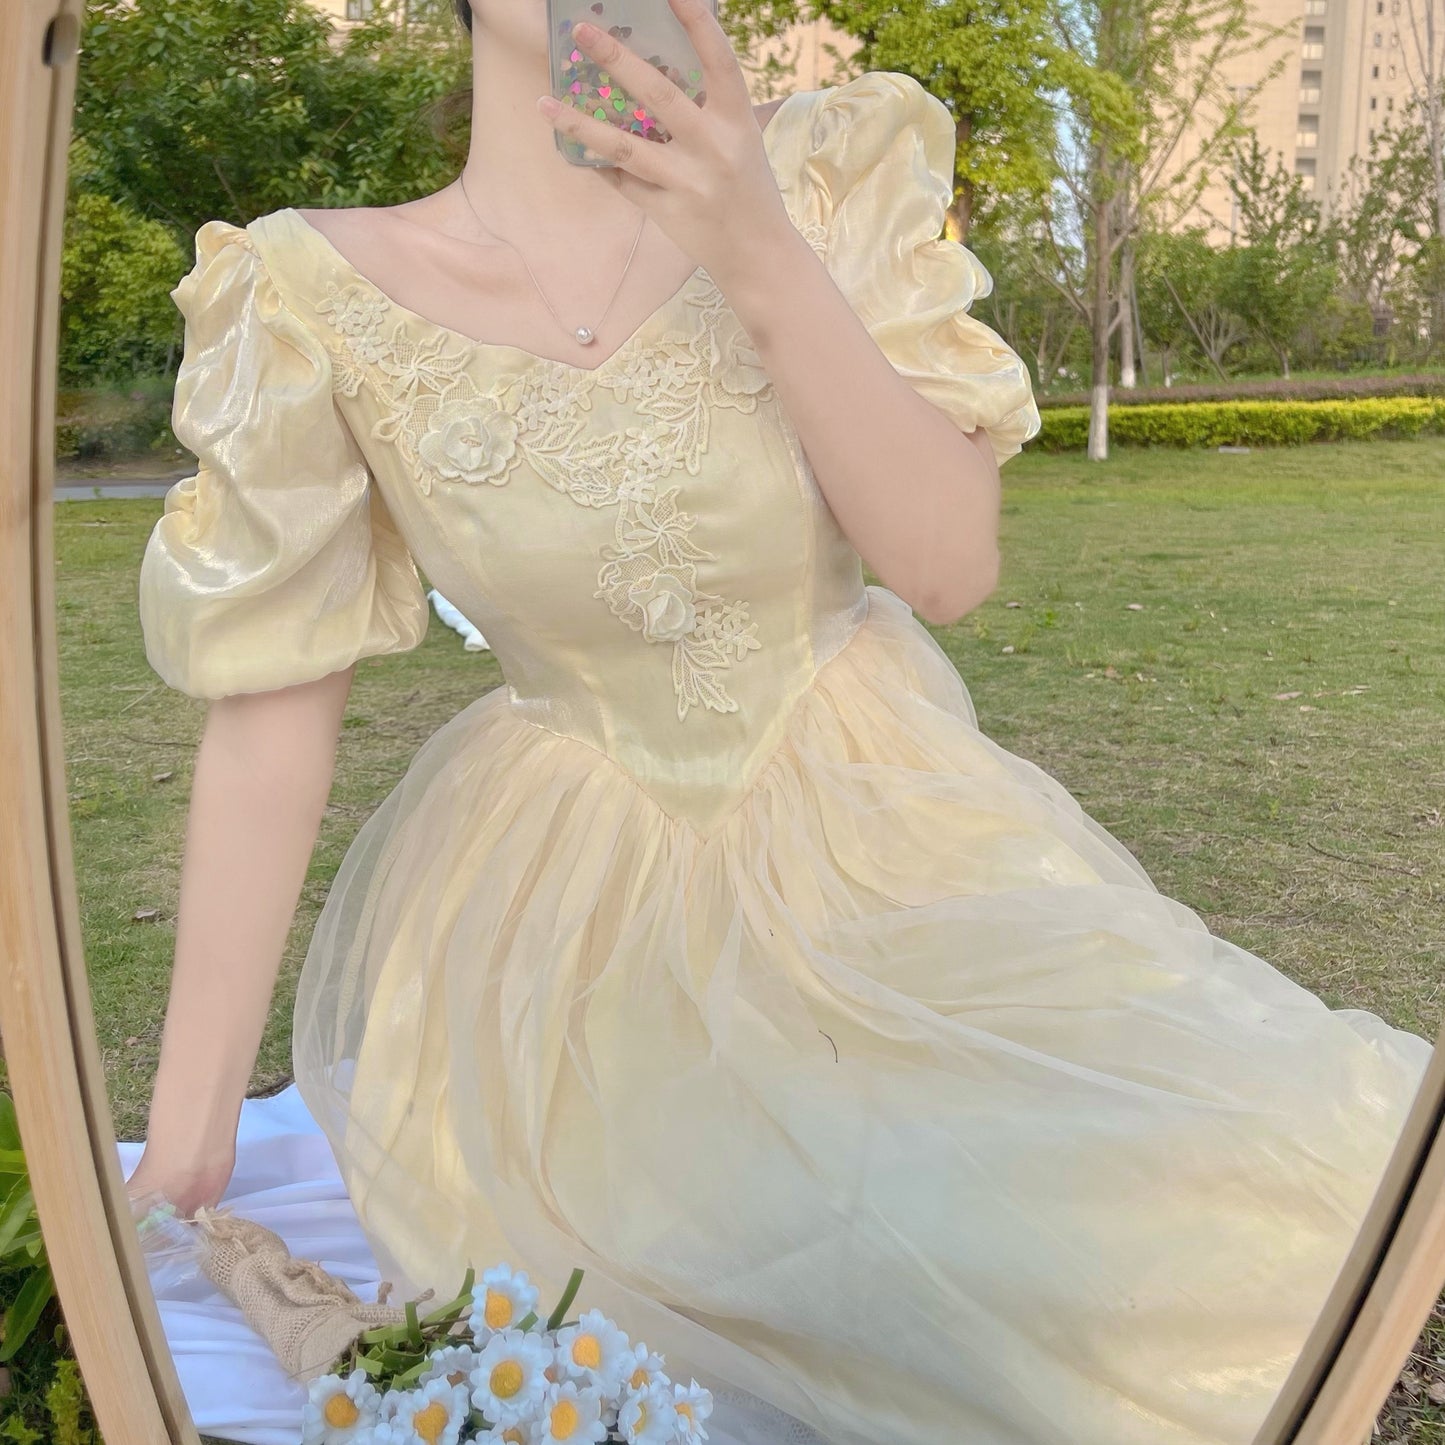 Belle Satin Puff Sleeve Maxi Dress (Yellow)